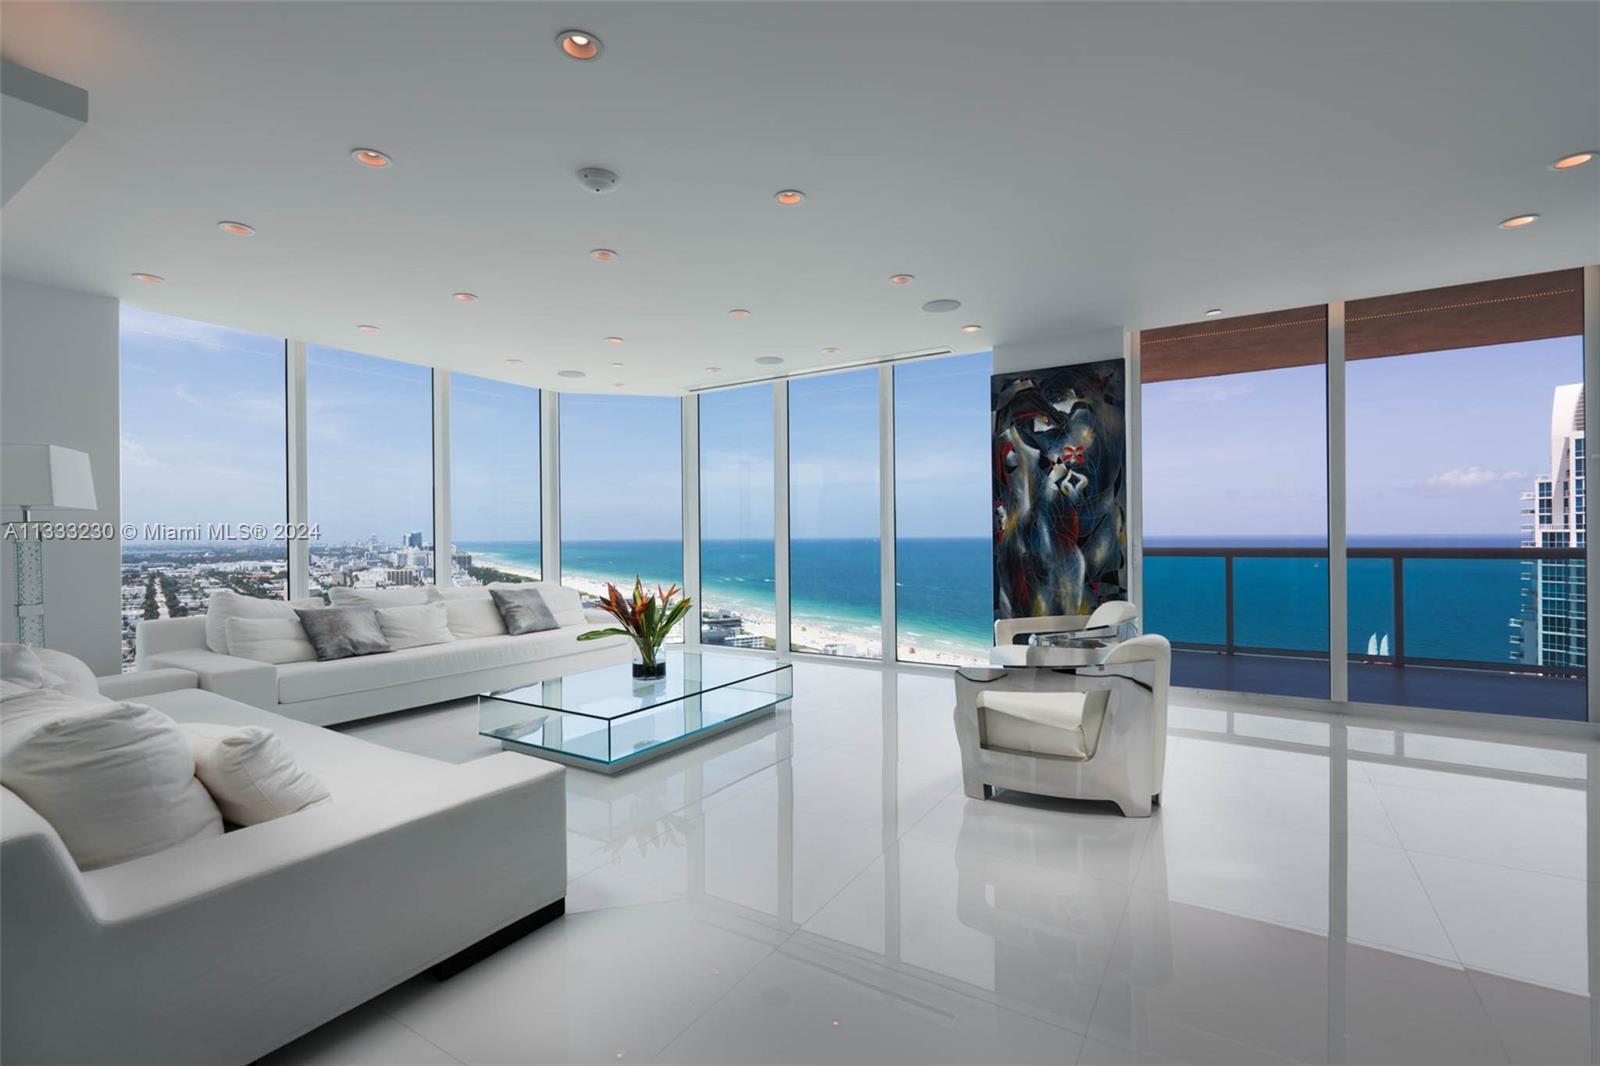 Property for Sale at 300 S Pointe Dr 3405, Miami Beach, Miami-Dade County, Florida - Bedrooms: 4 
Bathrooms: 4  - $9,200,000